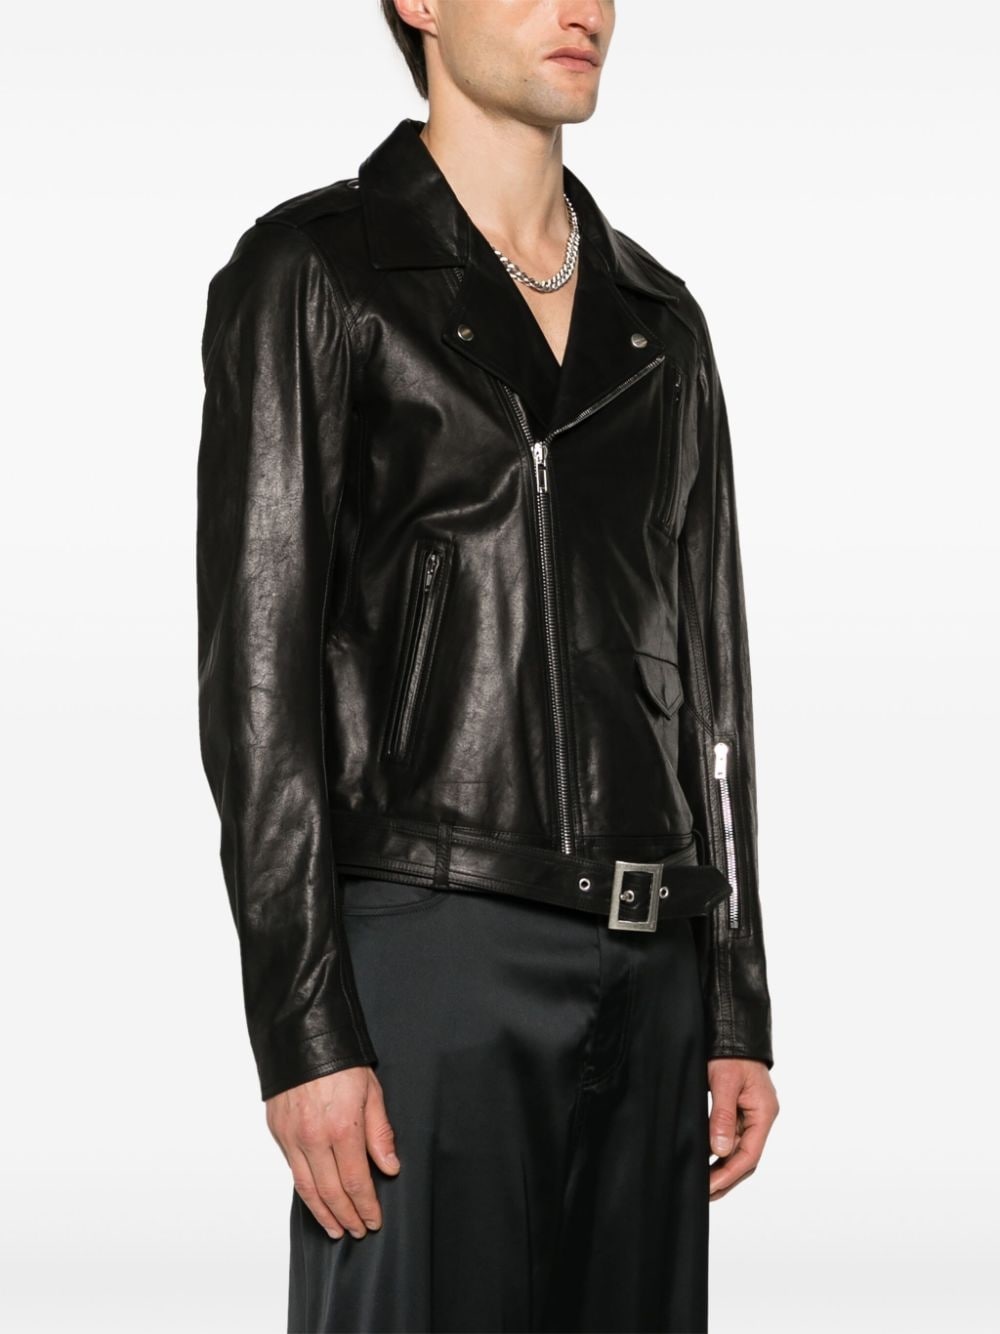 Lukes Stooges leather jacket - 3